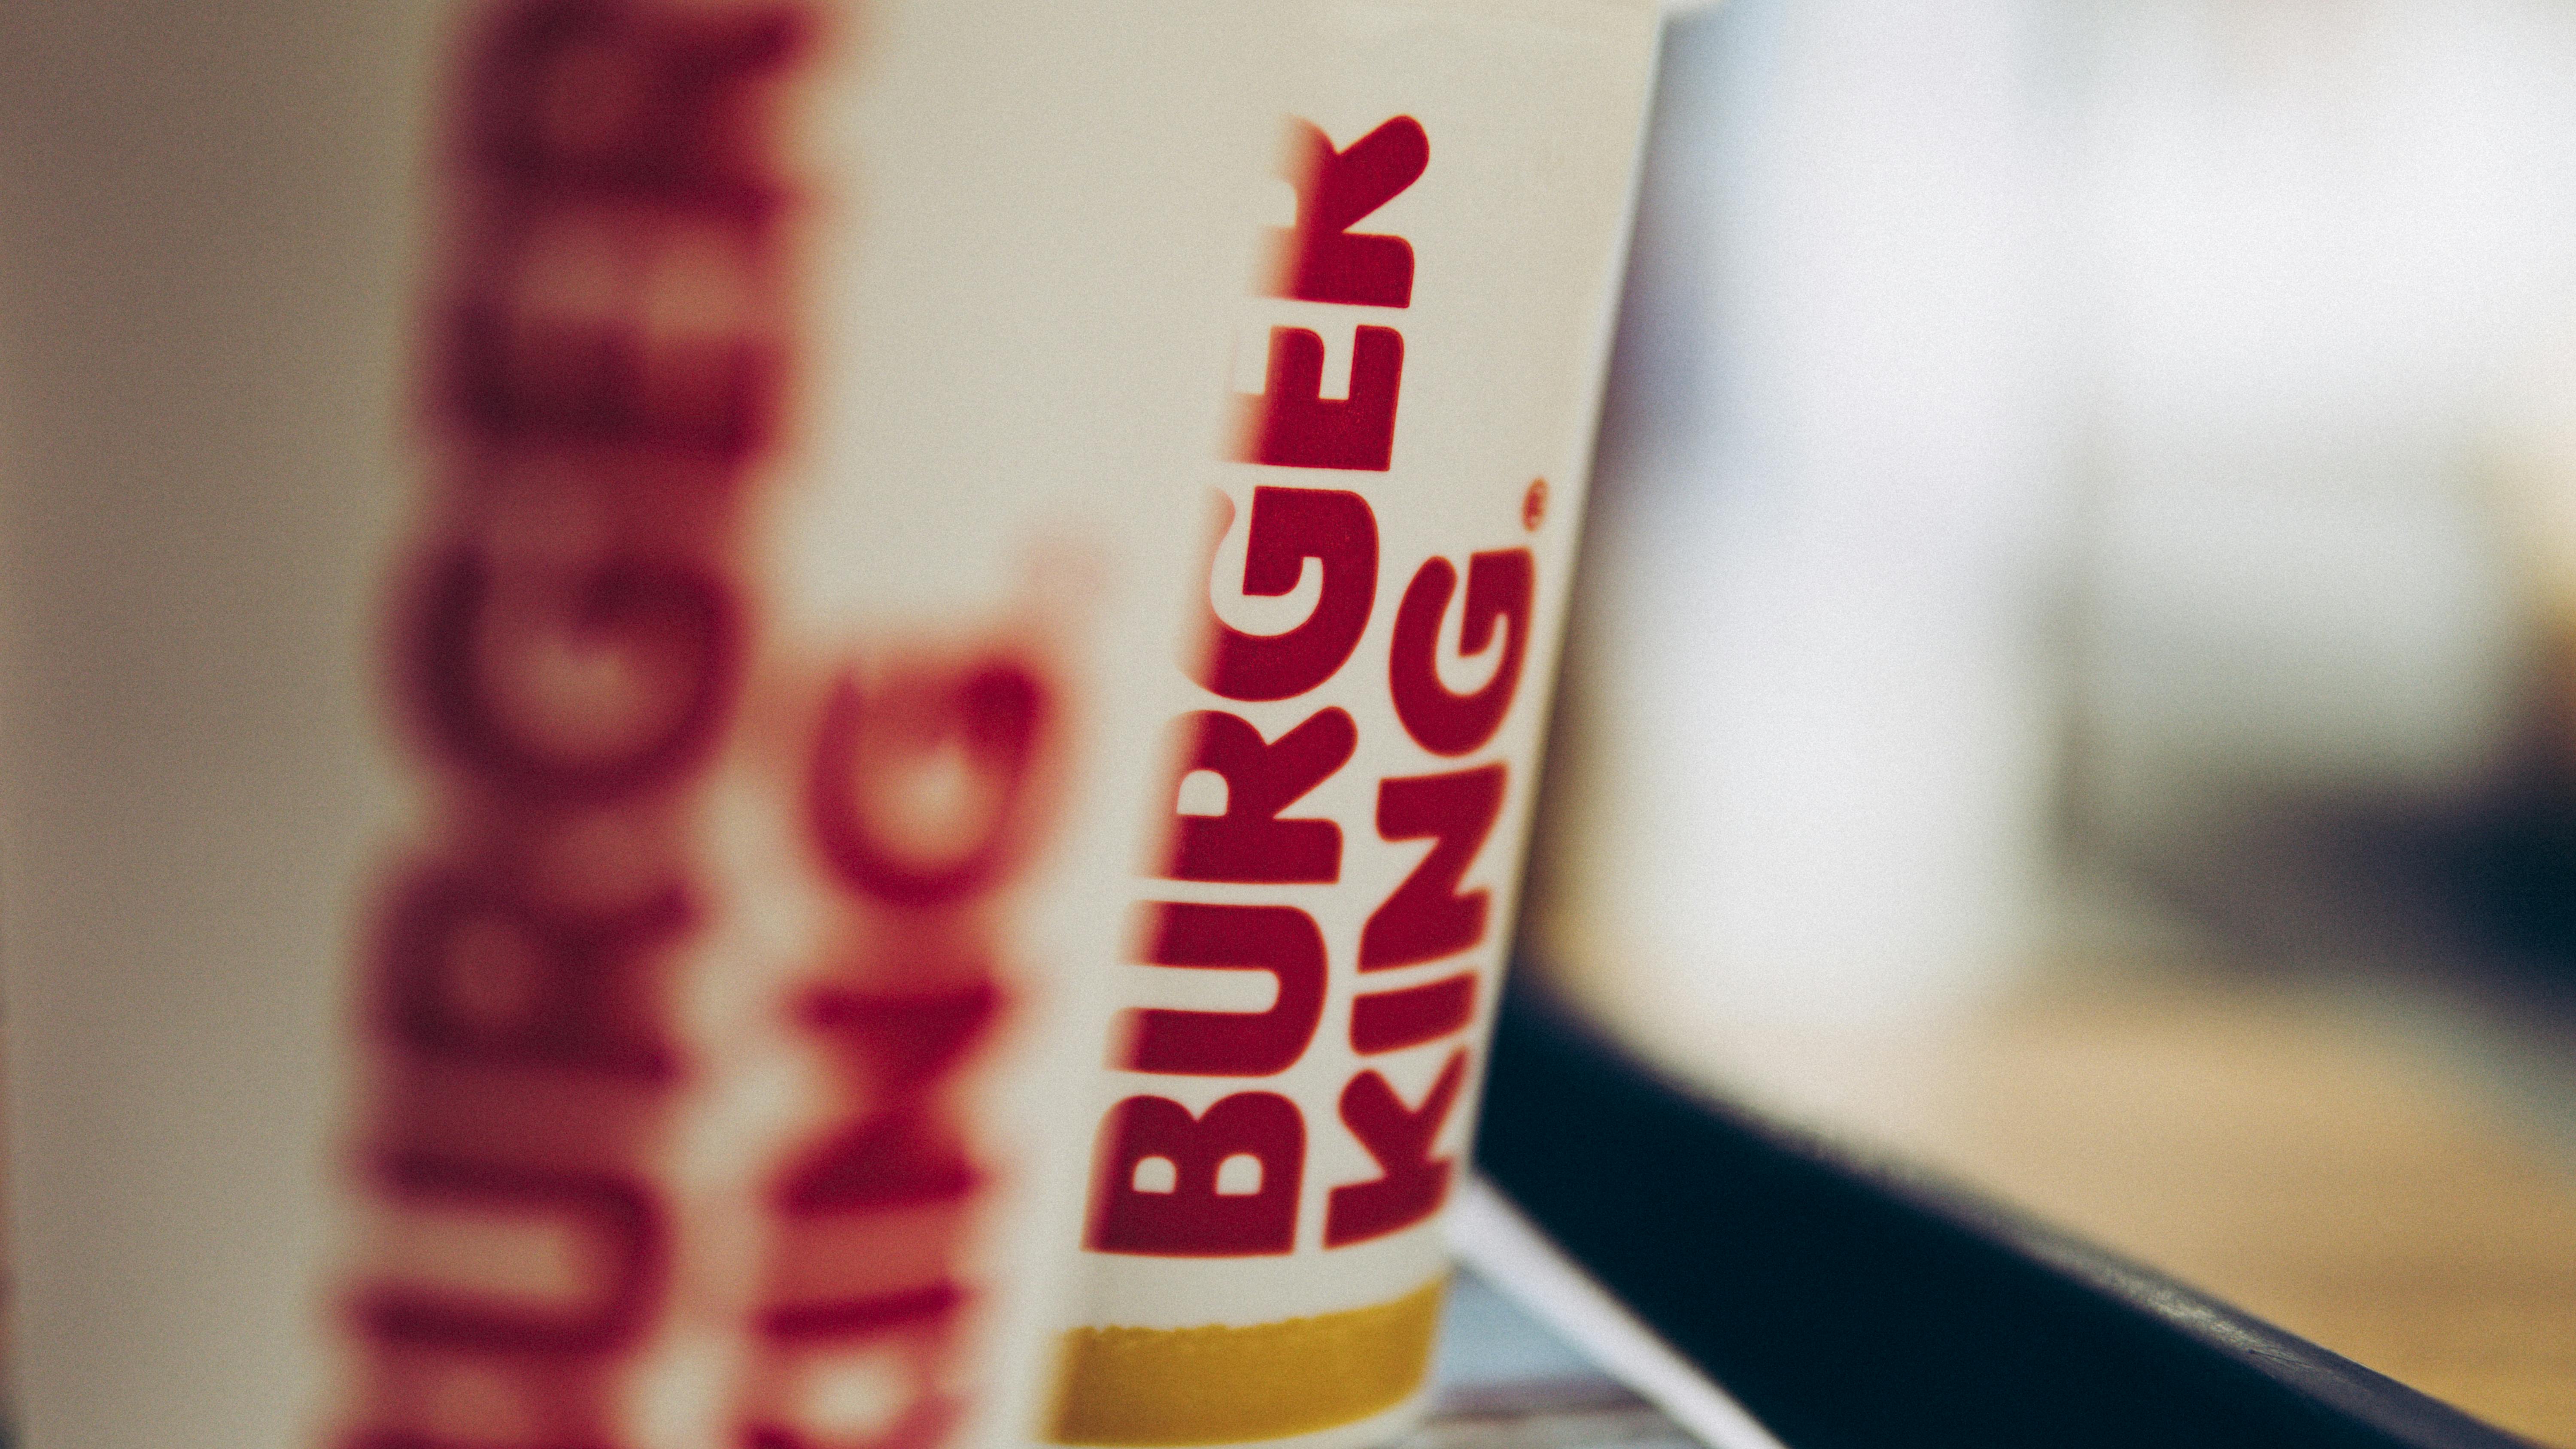 Free stock photo of burger king